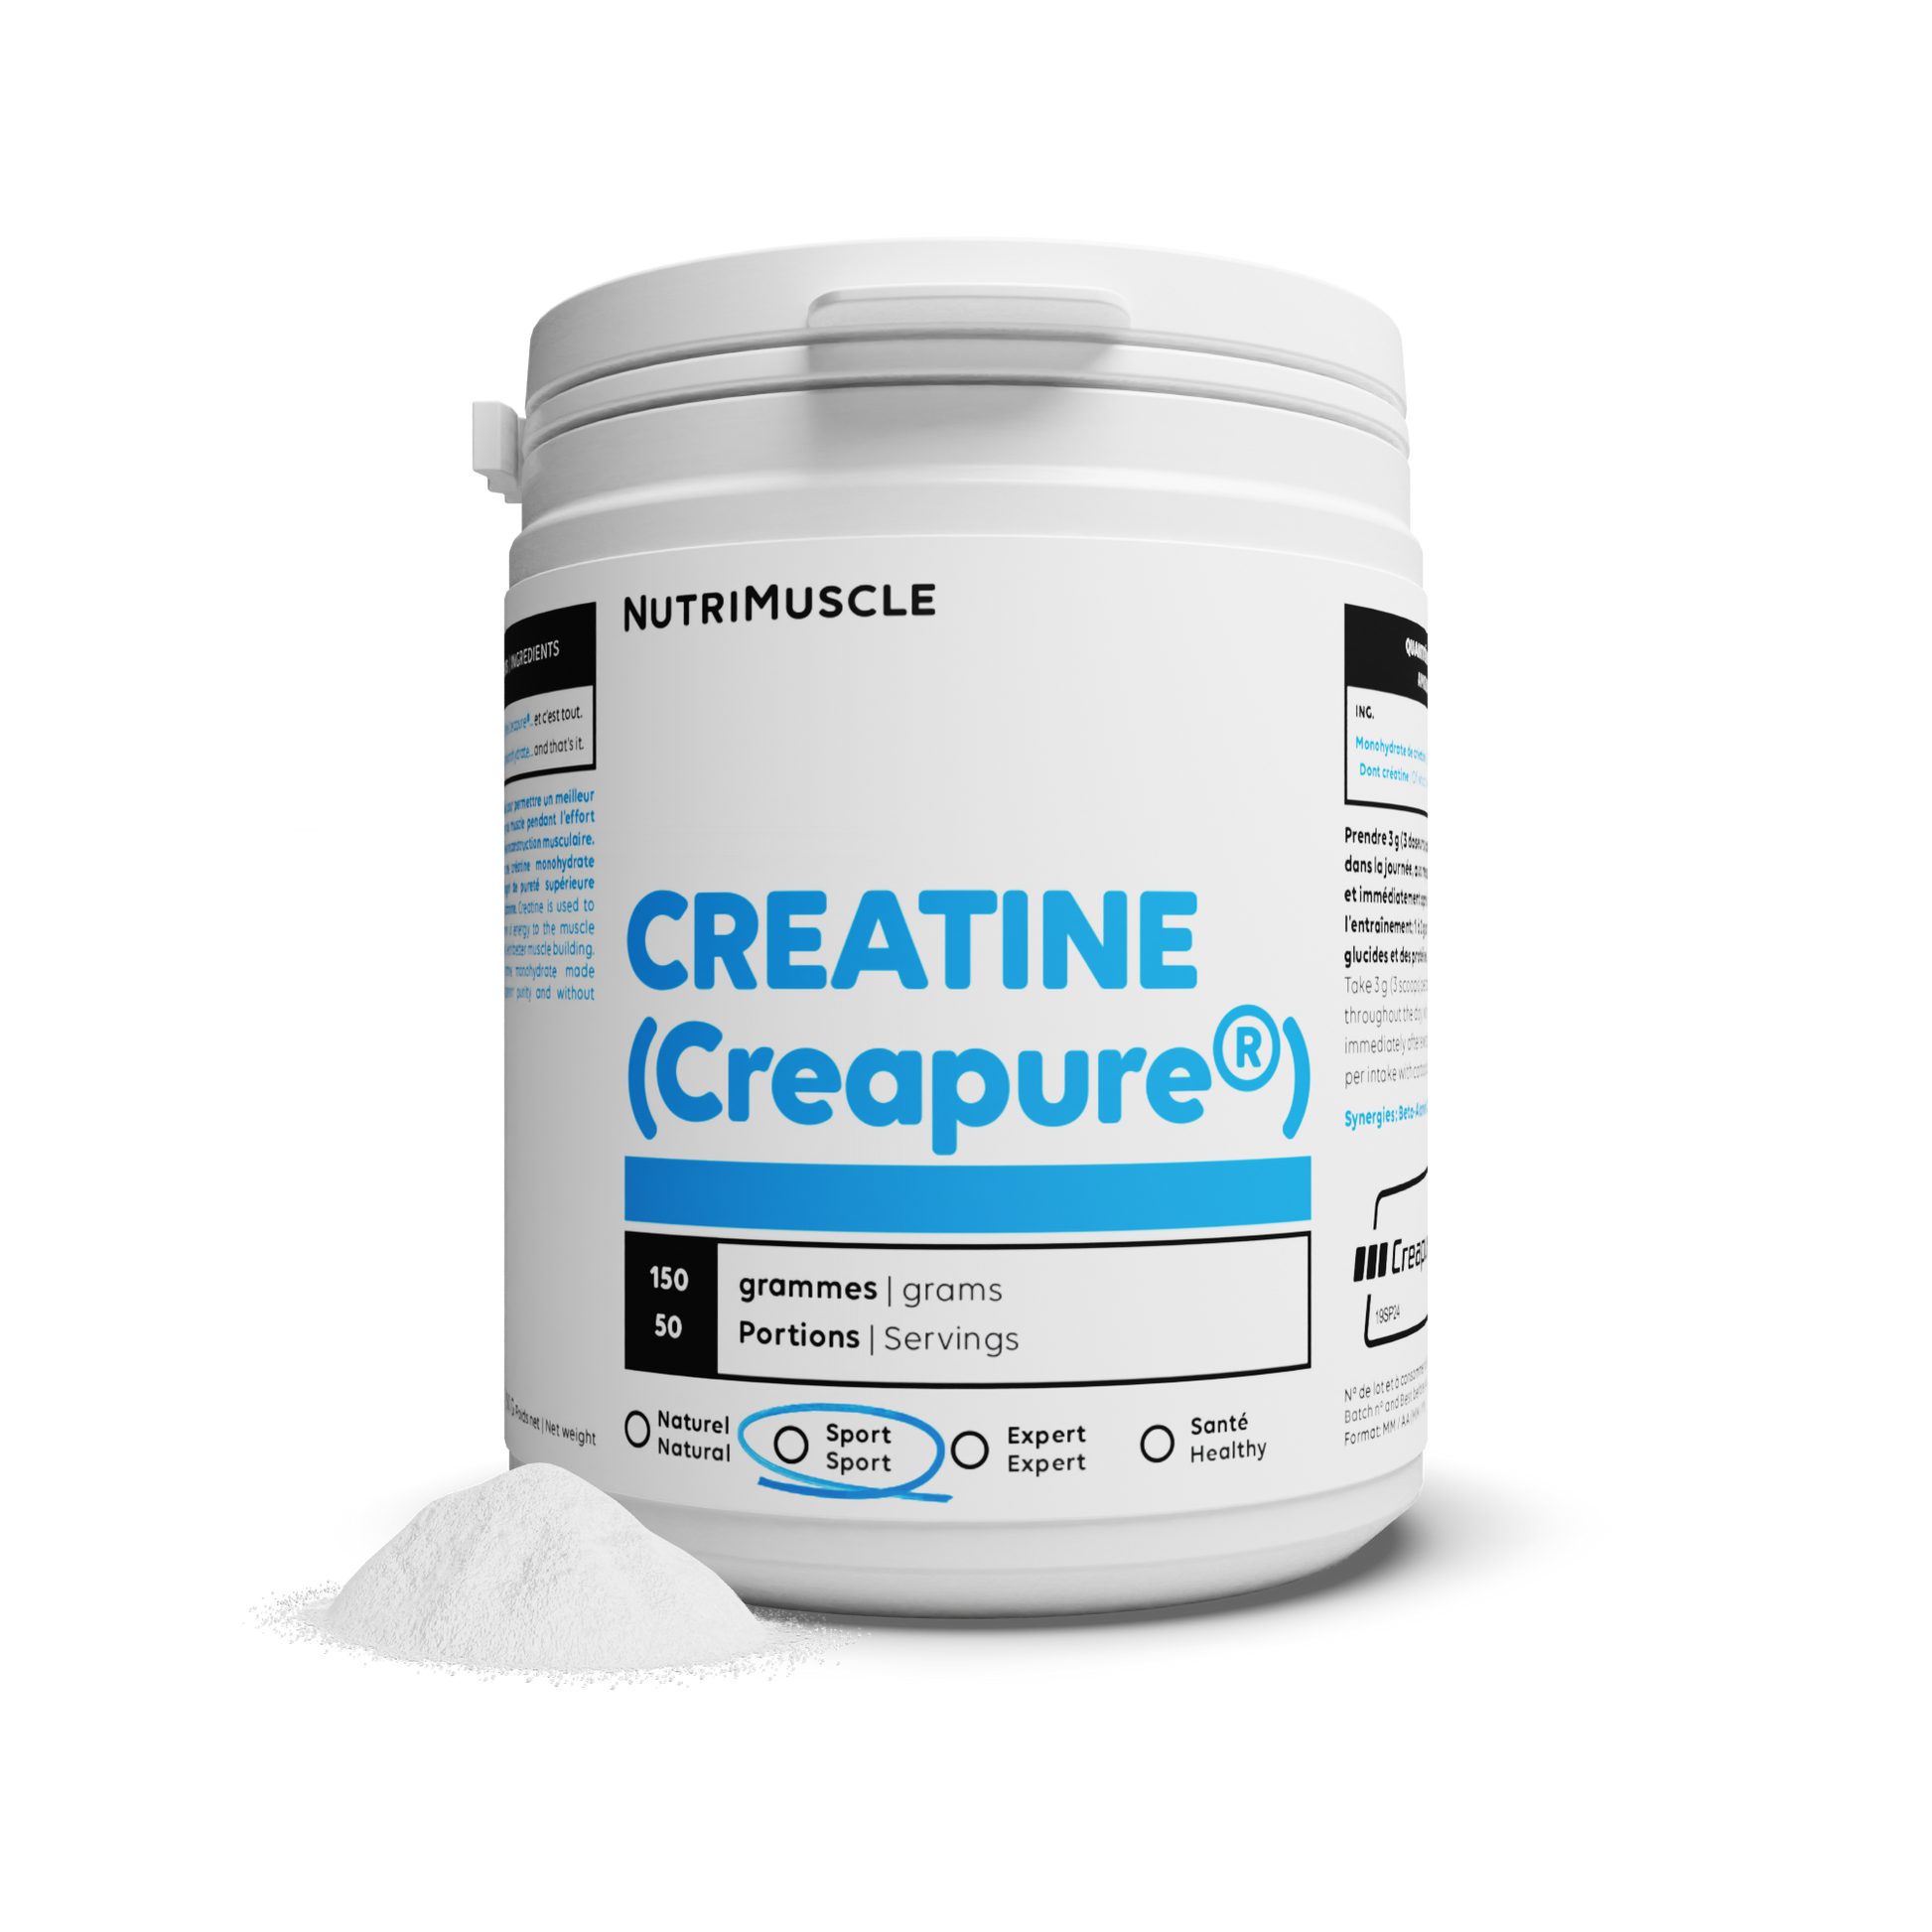 Creatine (Creapure®) in powder